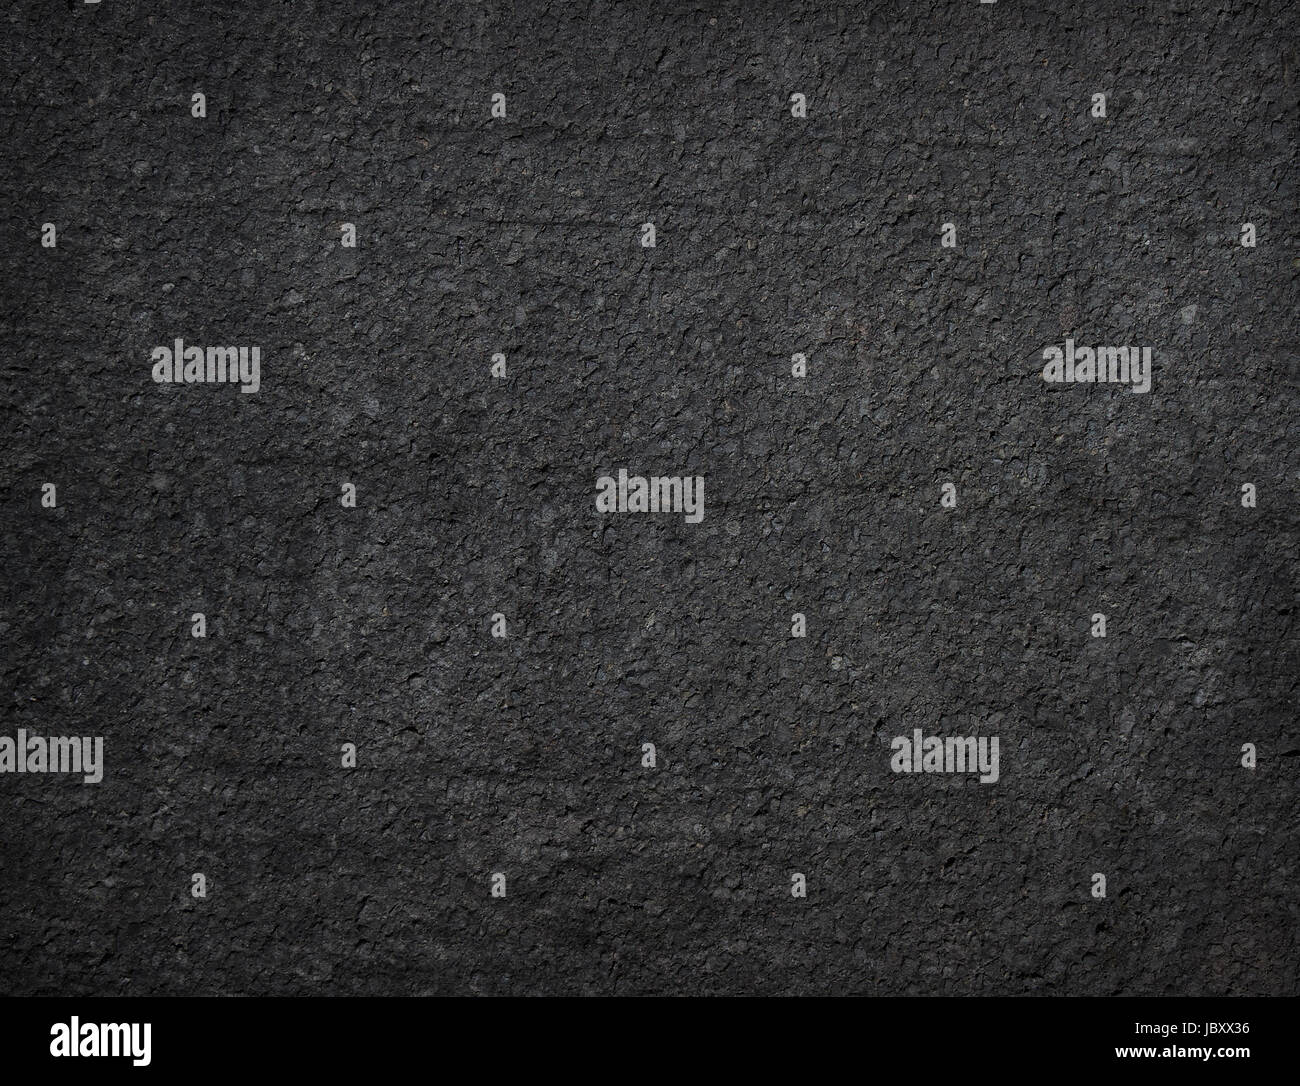 Leere Asphalt Hintergrund - dunkle Mahlgut, schwarze körnige Wand Textur Stockfoto